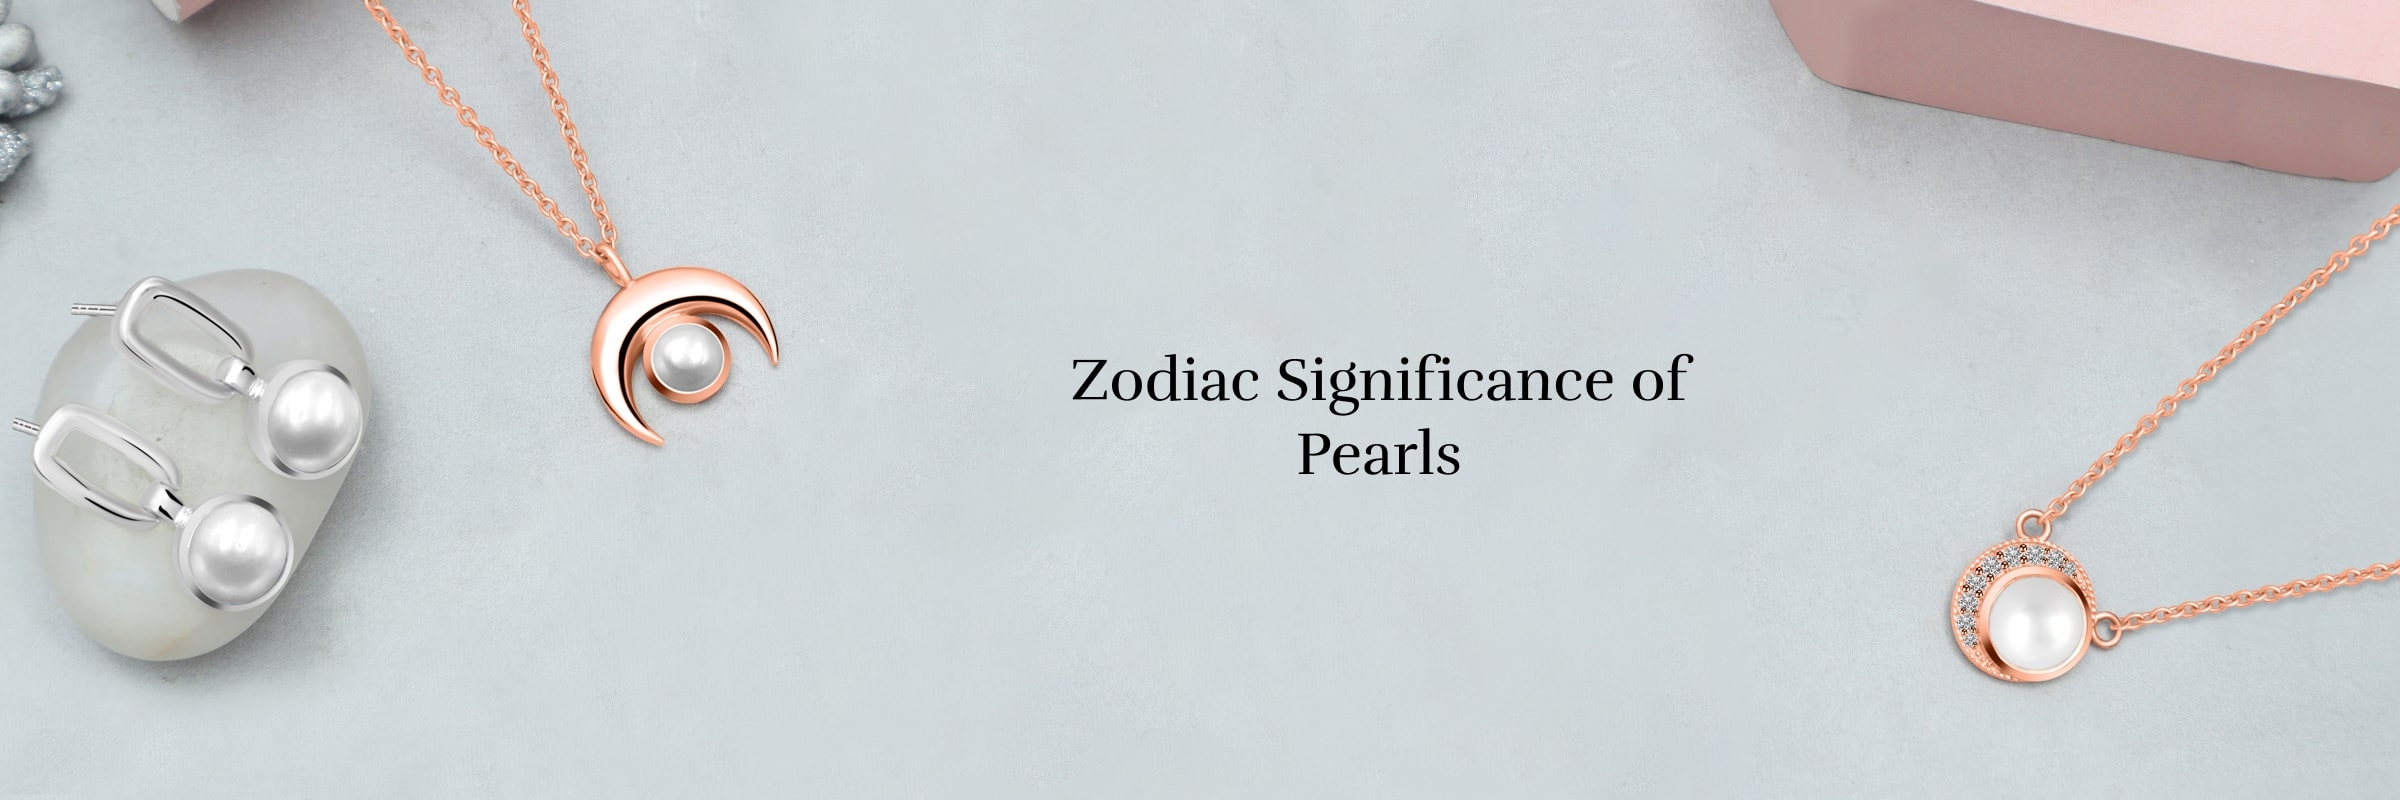 Pearl & Its Zodiac Association